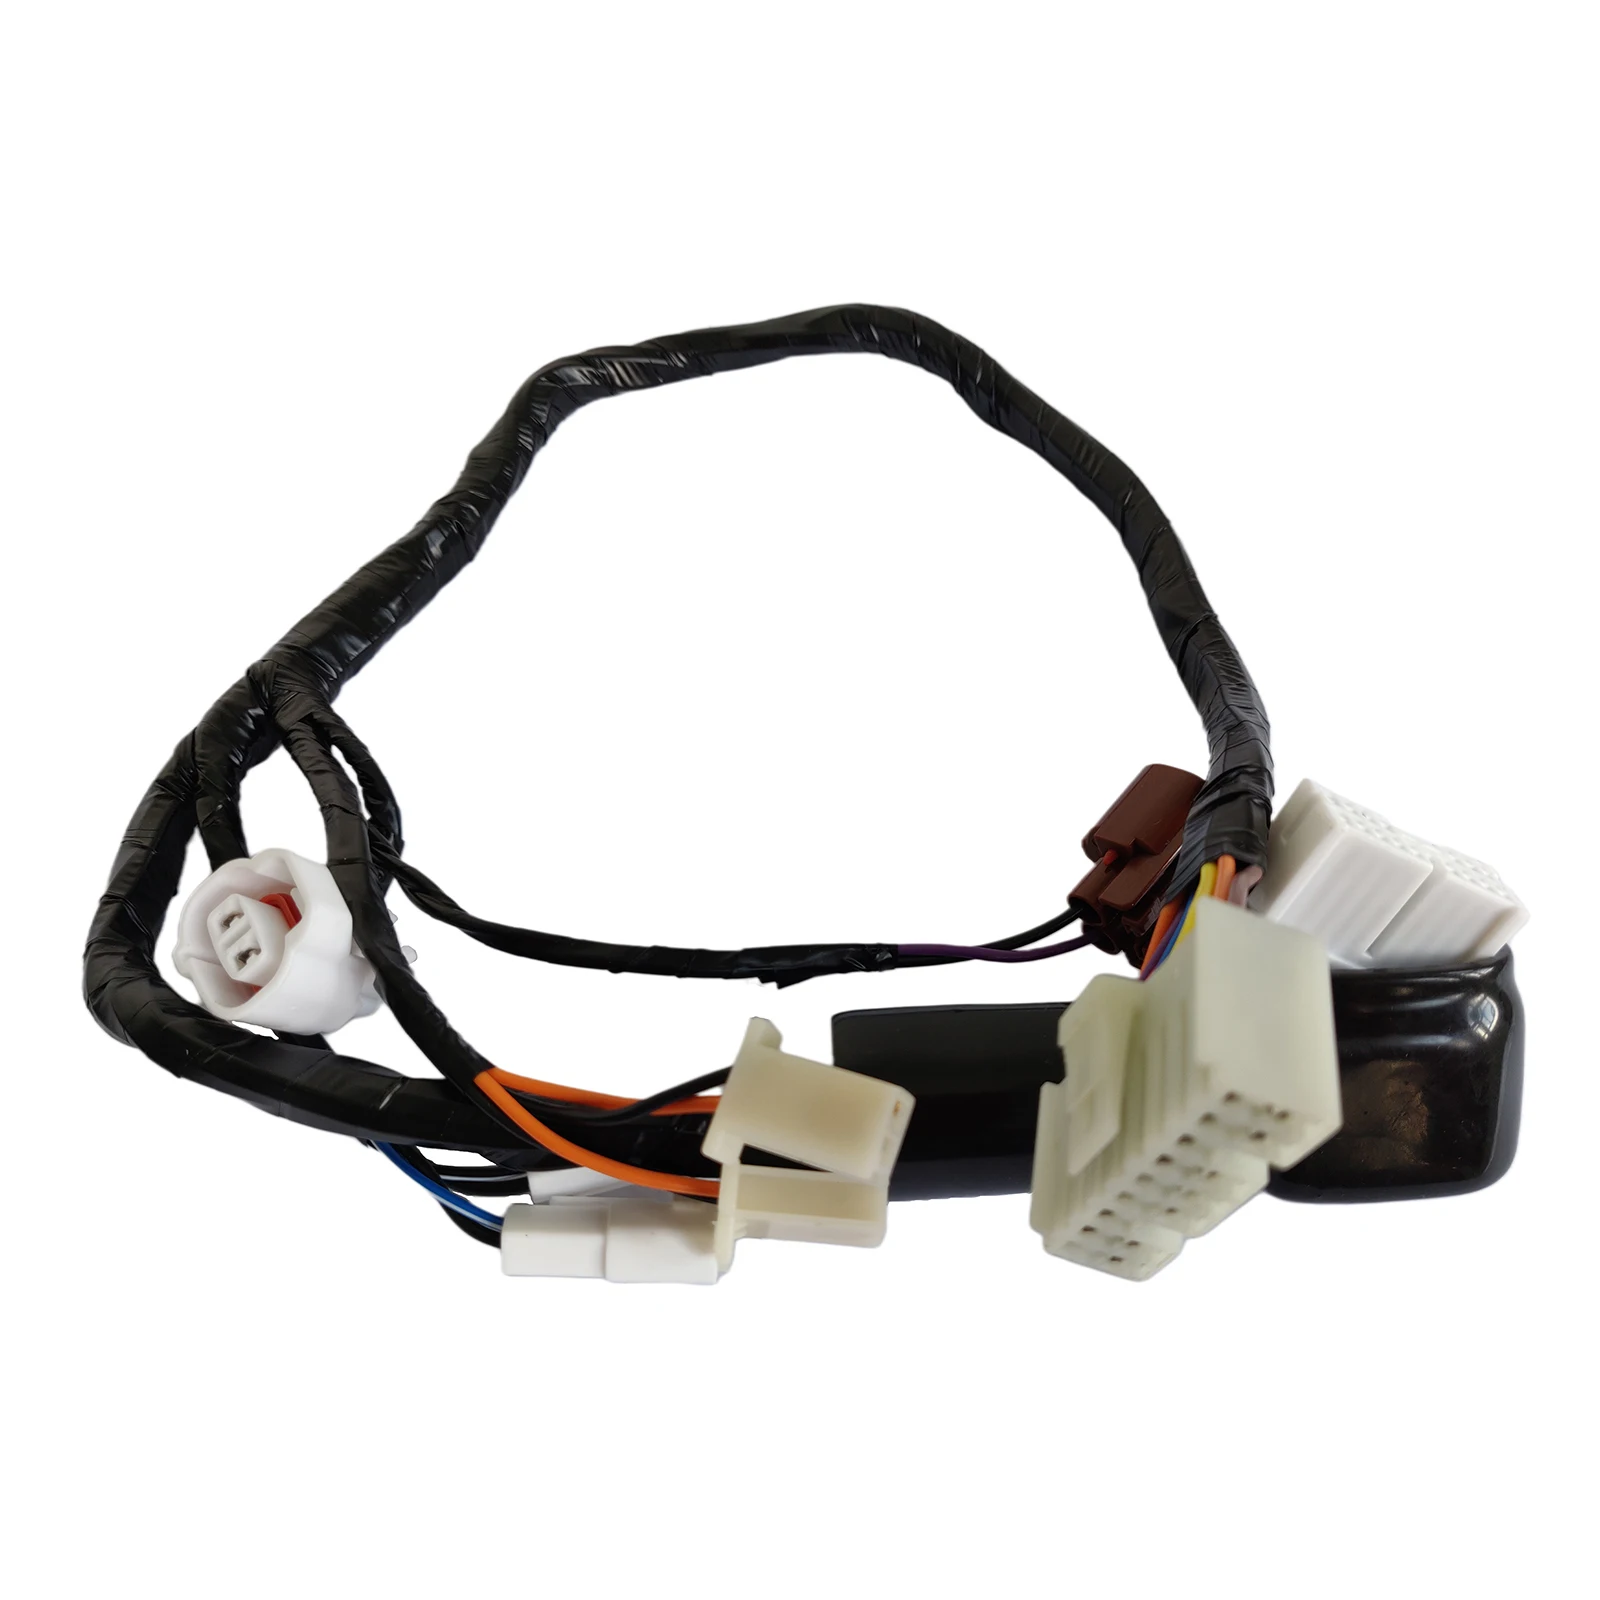 Headlight Wire Harness Assembly Kit fits for Suzuki GSXR 1000 05-06 36620-41G00